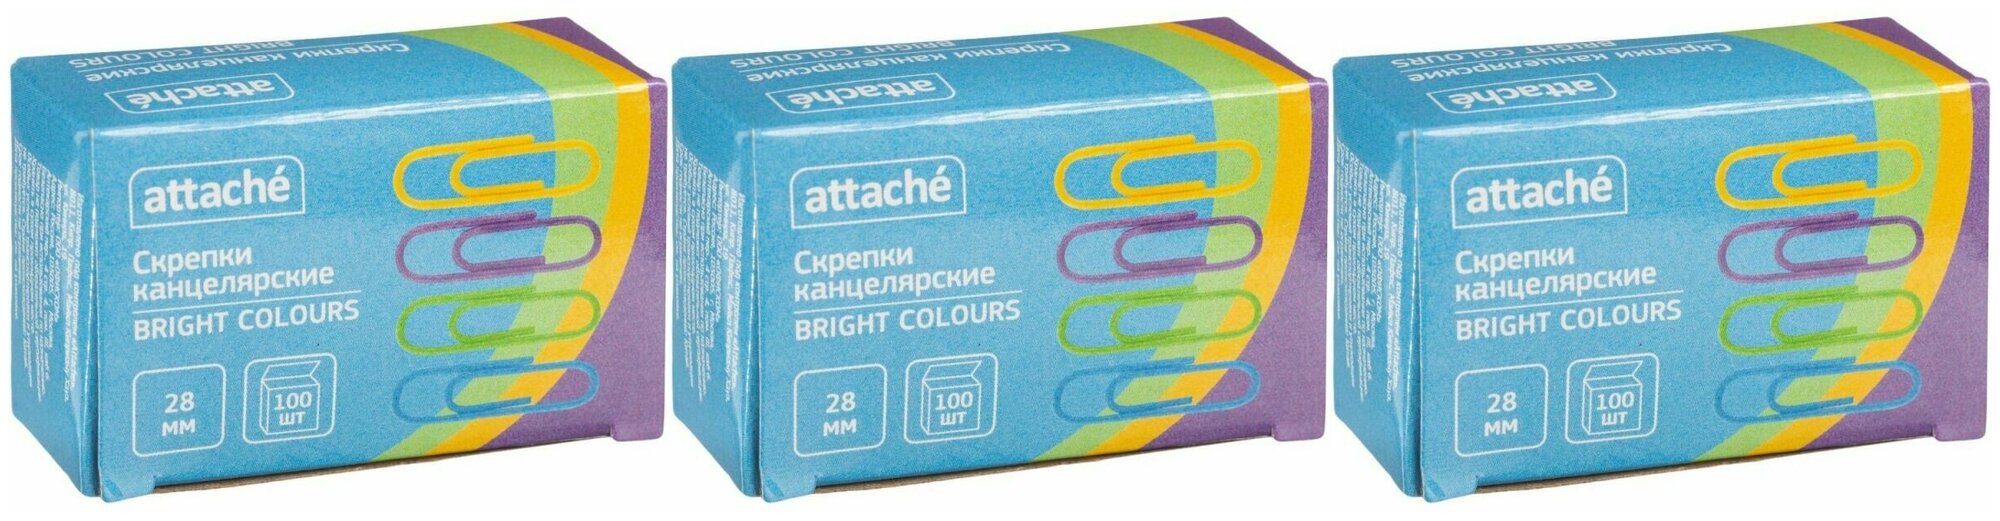 Attache Скрепки Bright Colours 28 мм 100 шт, 3 уп